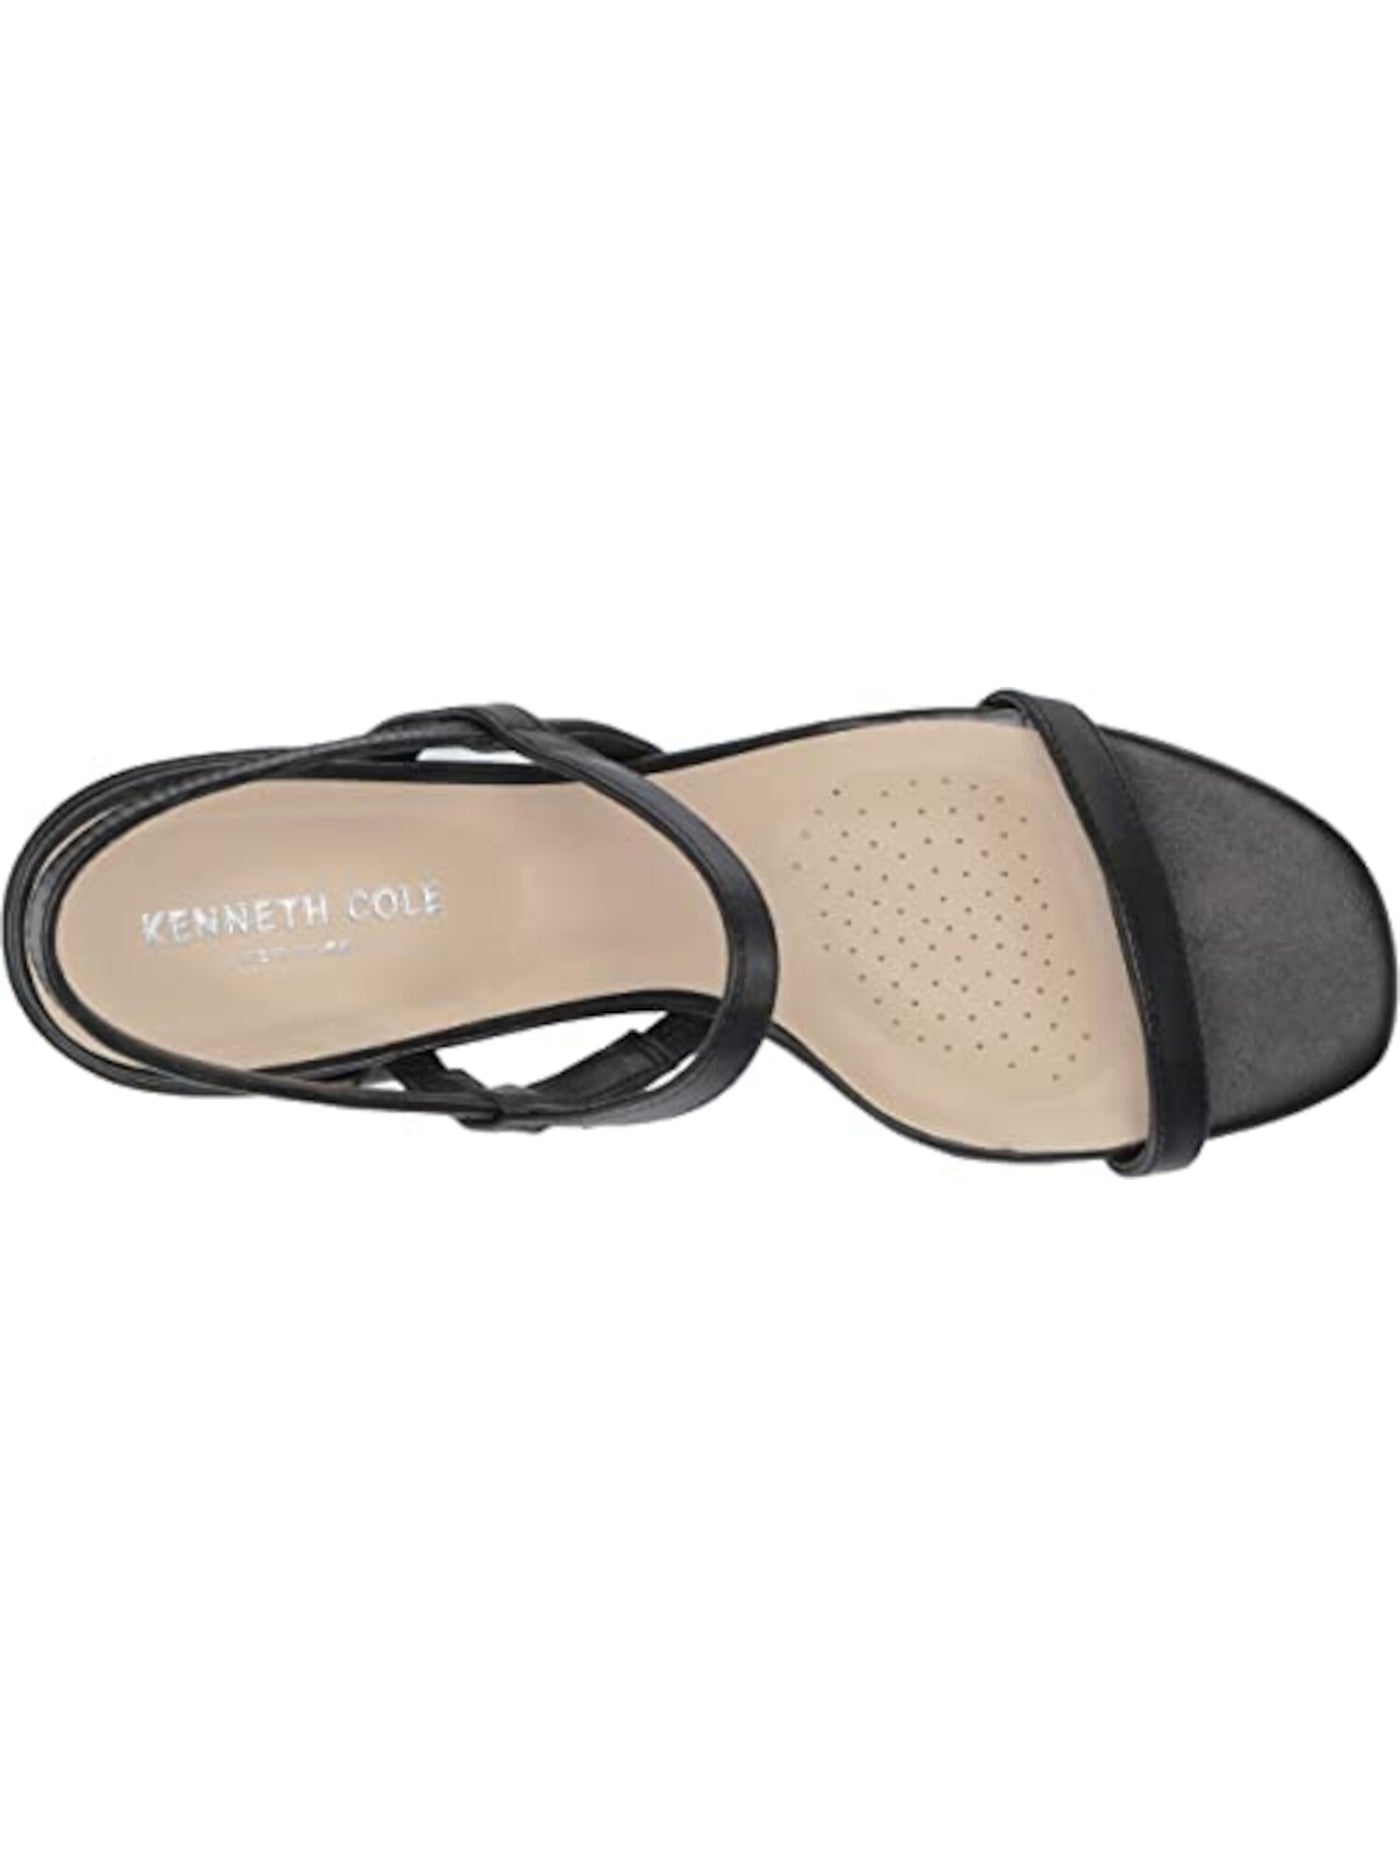 KENNETH COLE Womens Black Comfort Maisie Square Toe Block Heel Slip On Leather Slingback Sandal 5 M